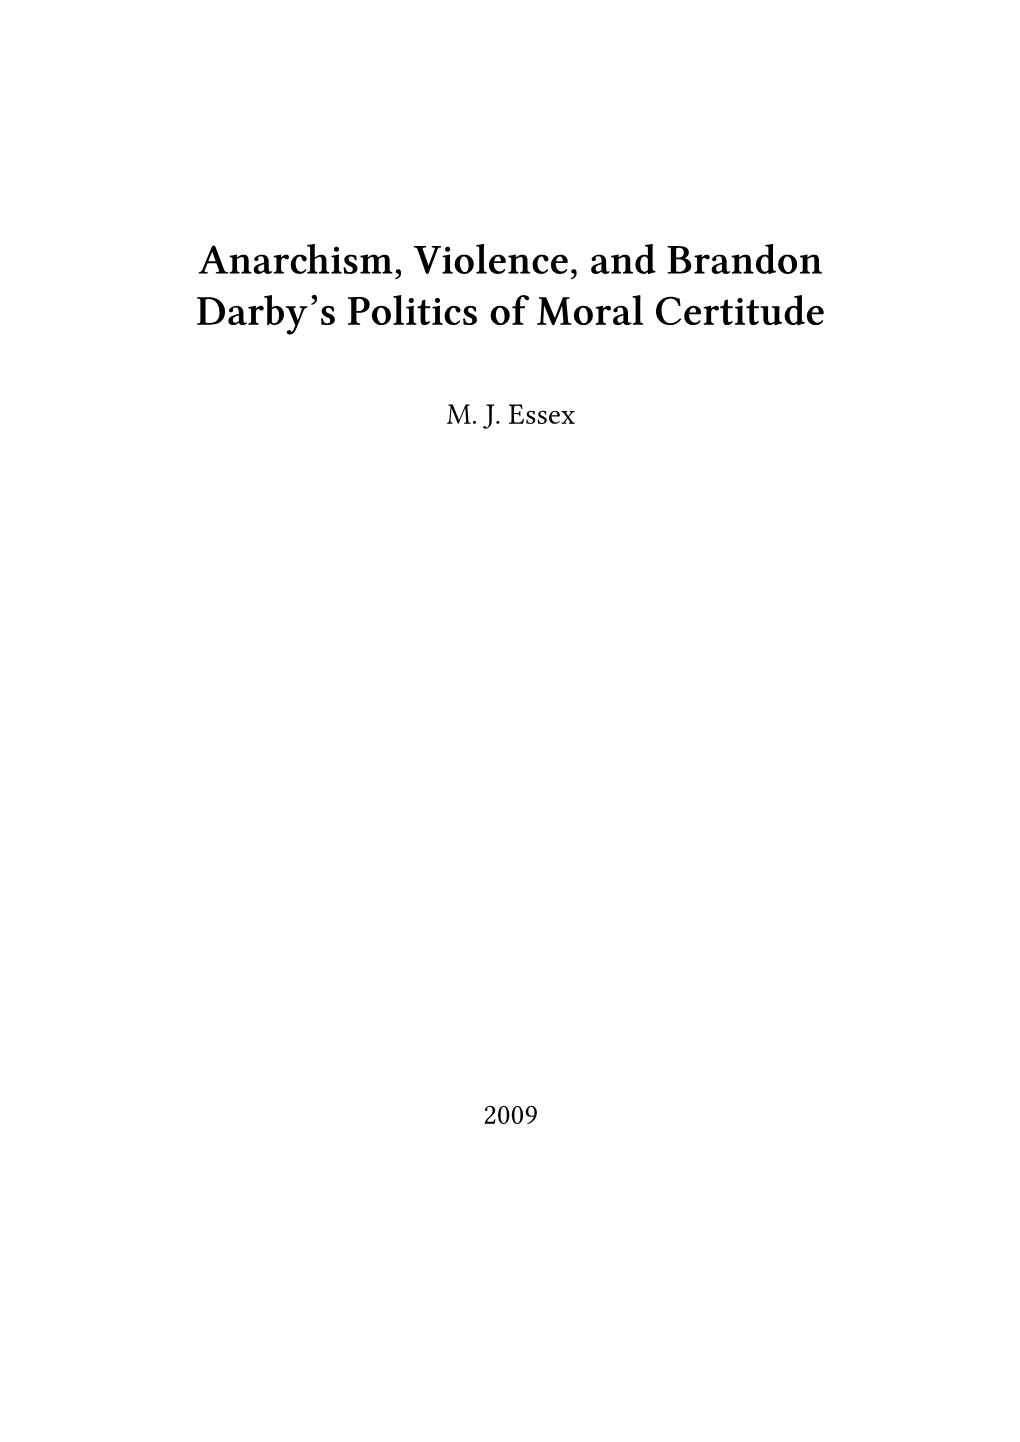 Anarchism, Violence, and Brandon Darby's Politics of Moral Certitude